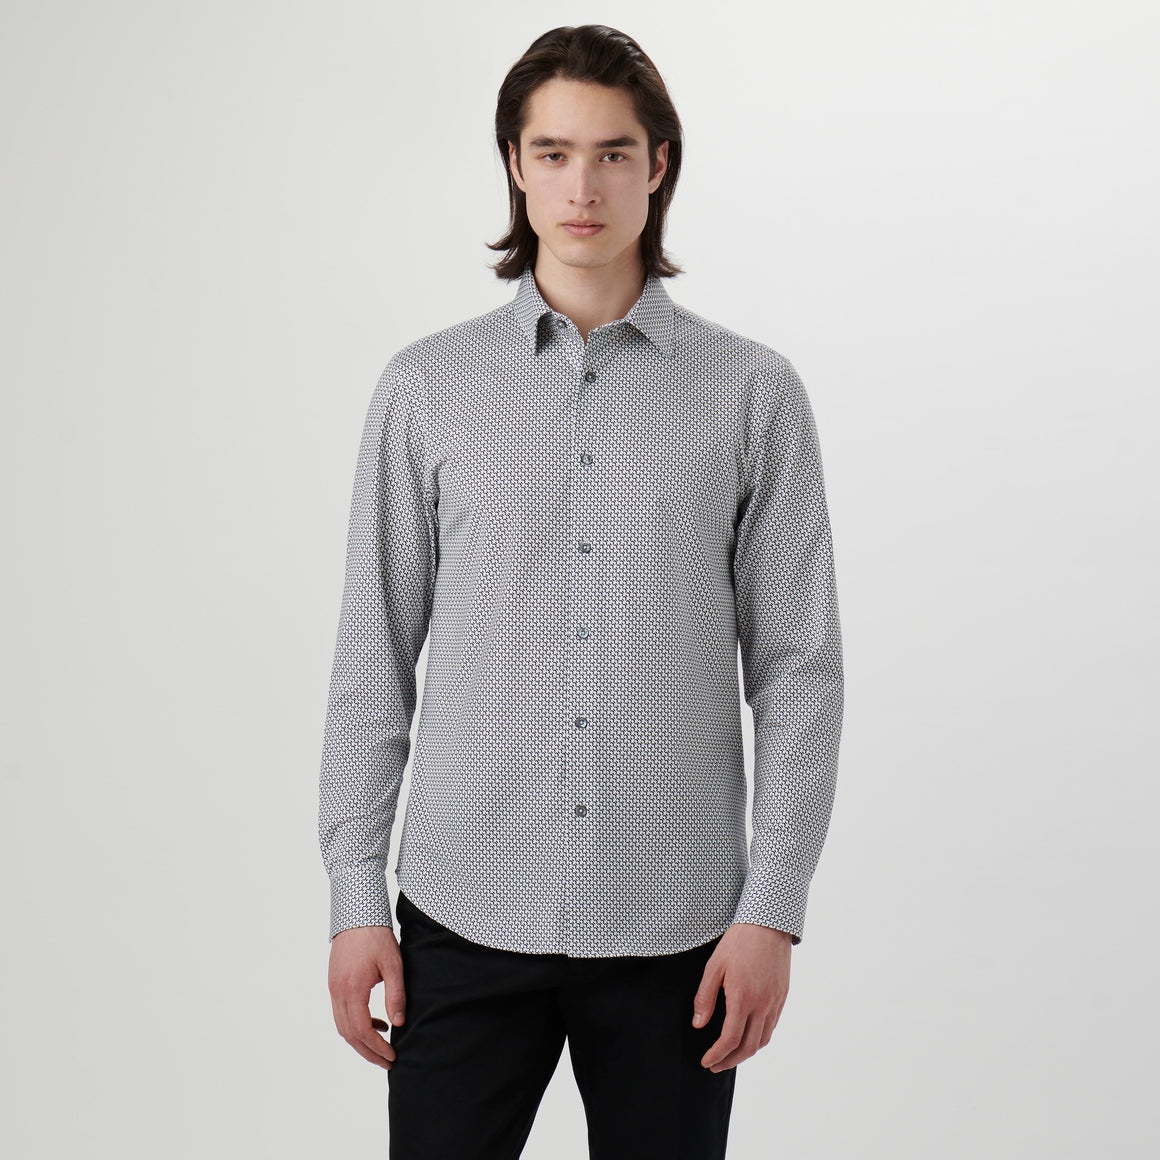 OOOHCotton James Long Sleeve Shirt Geometric White